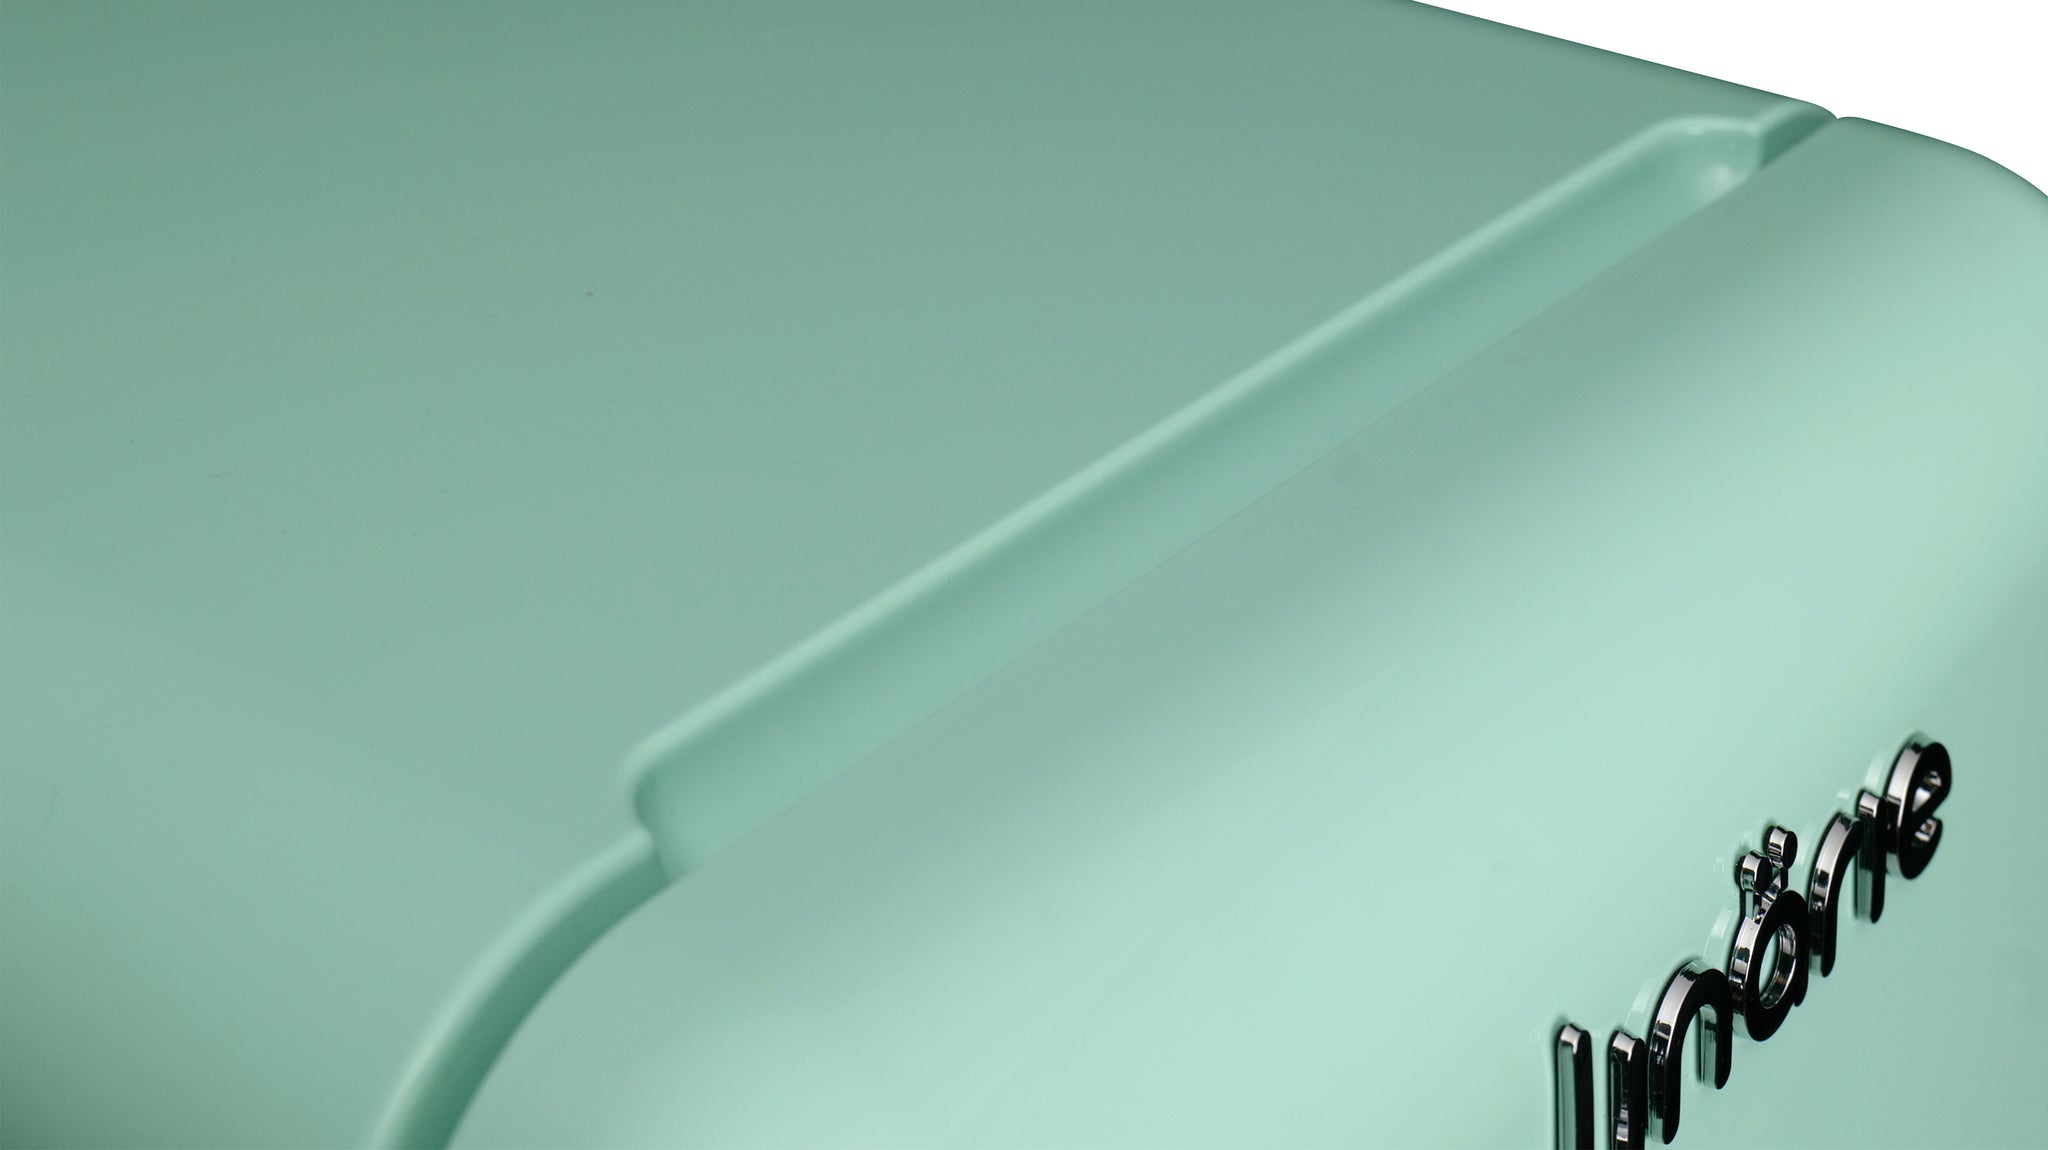 Linarie | Tignes 91L Green Retro Mini Fridge with Built-In Freezer Compartment LK90TTGREEN